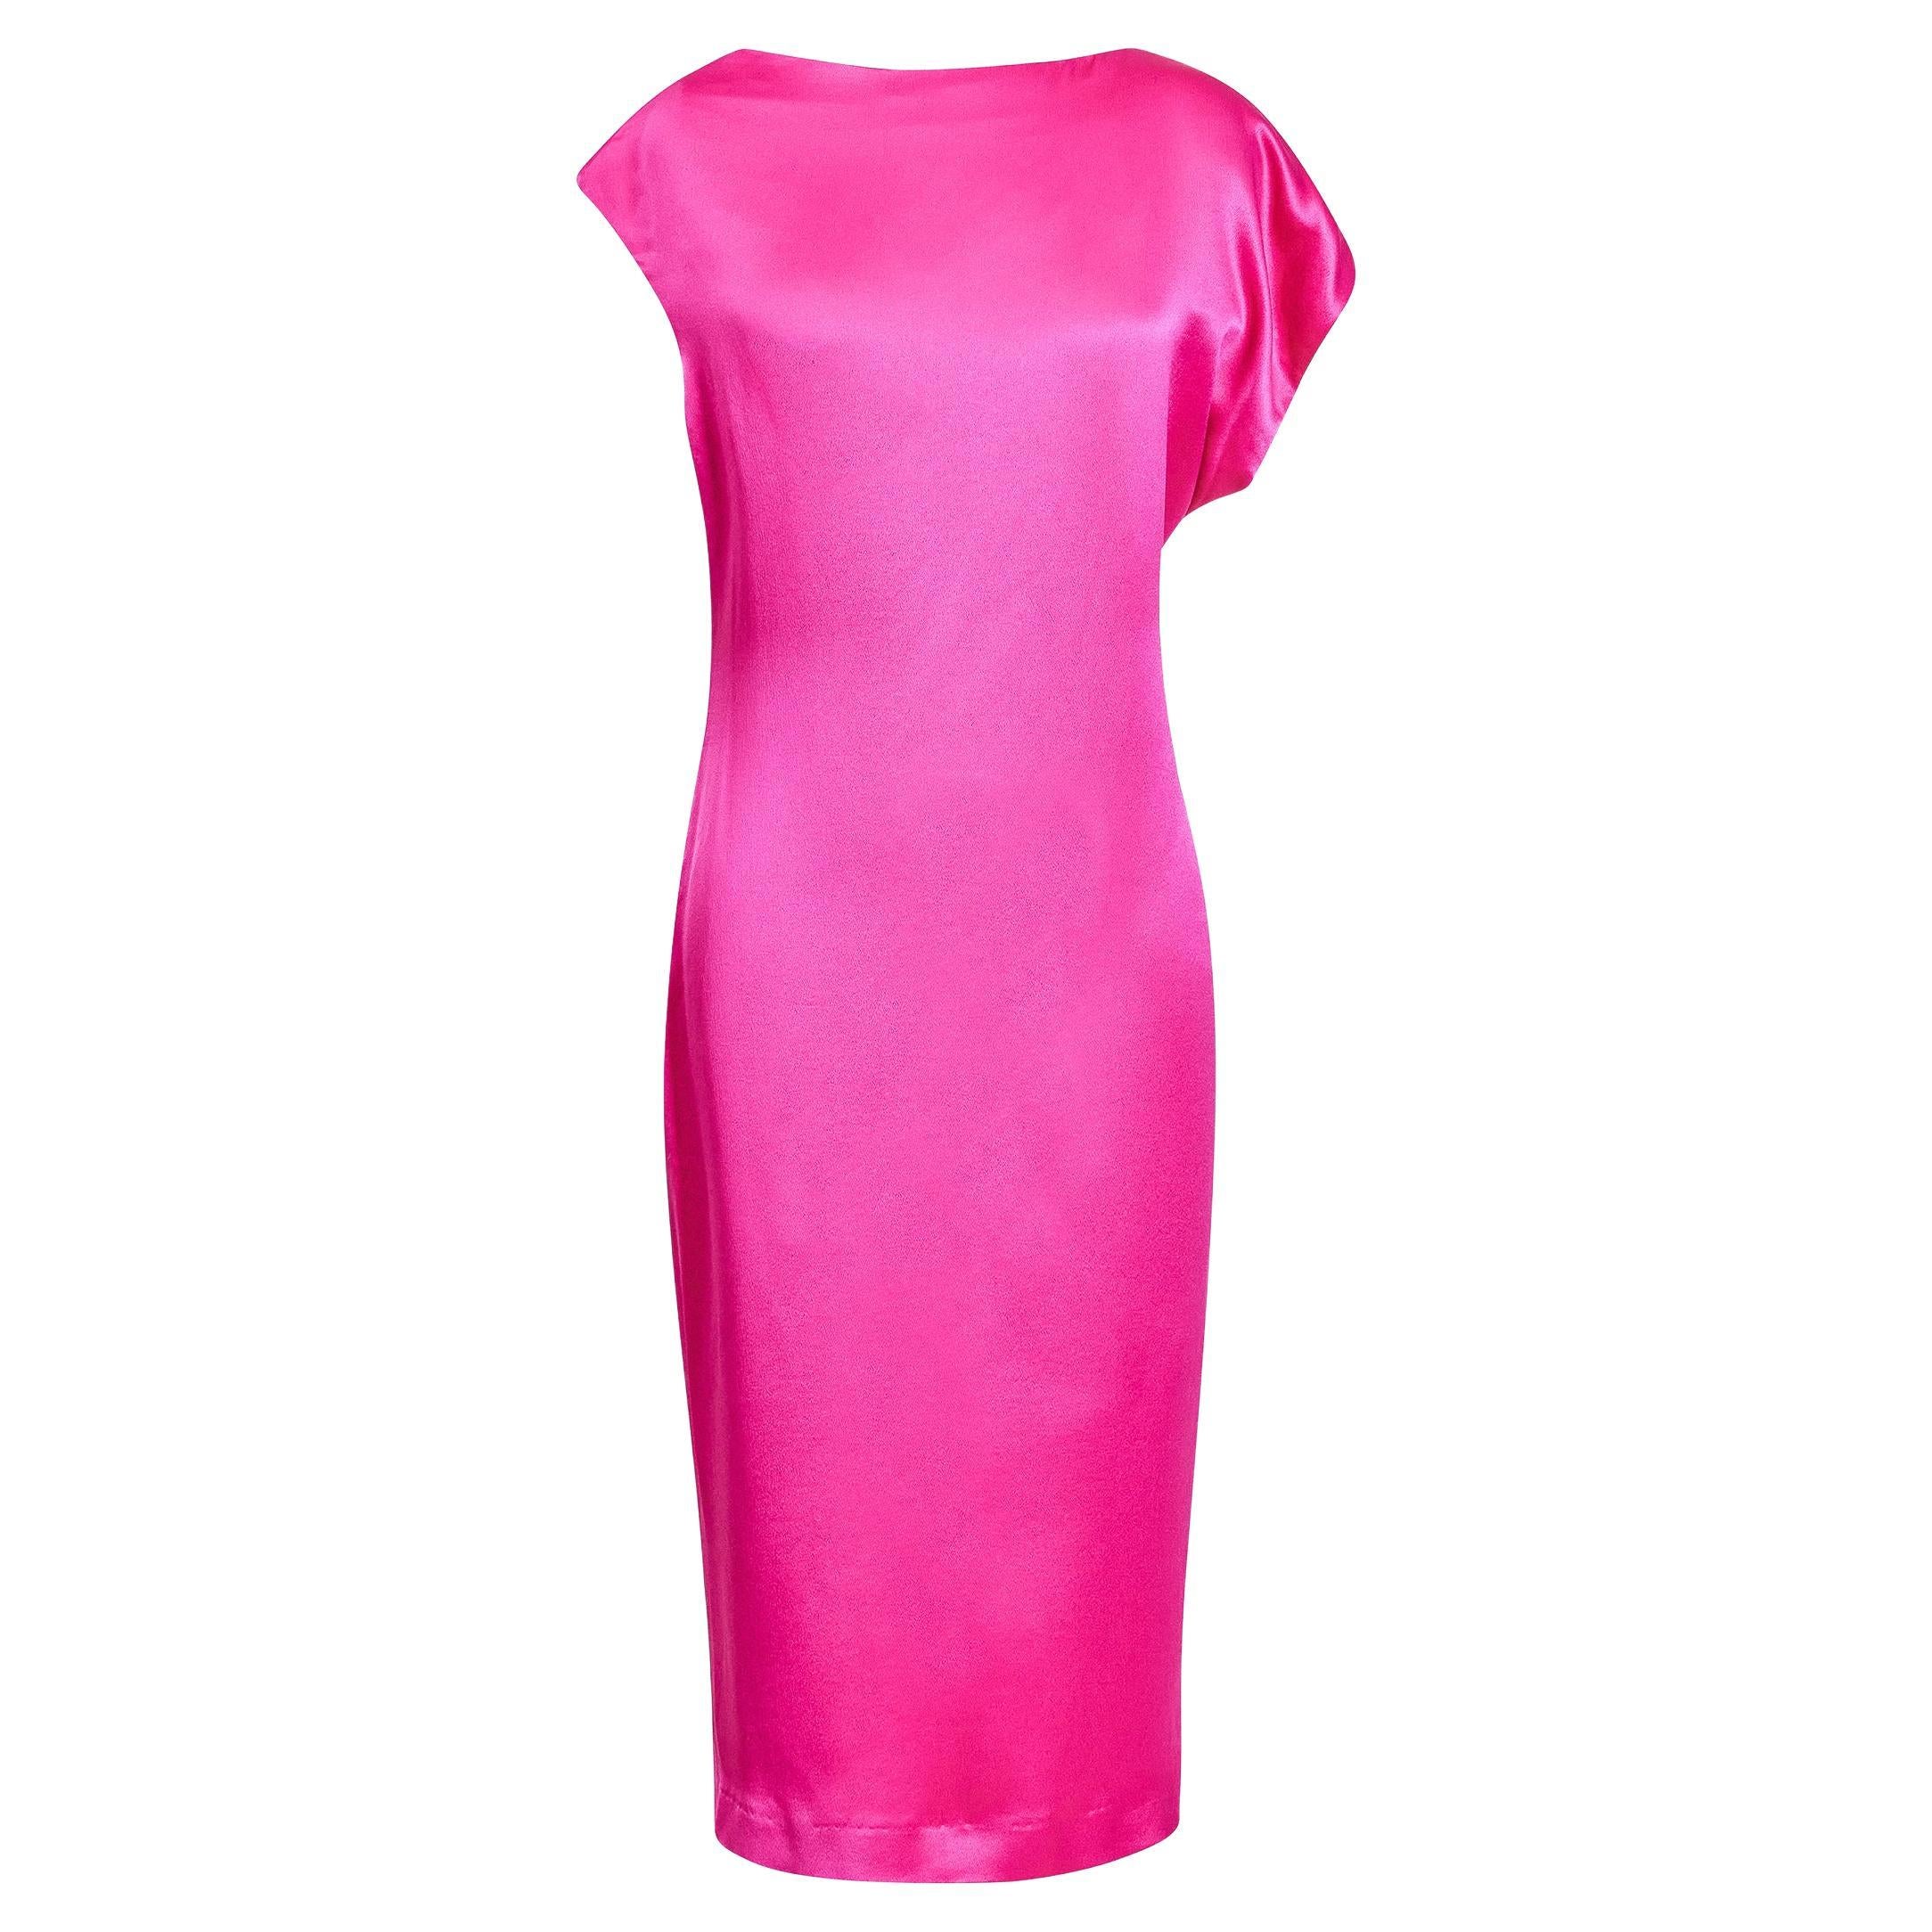 S/S 2008 Alexander McQueen Hot Pink Silk Charmeuse Asymmetrical Midi Dress